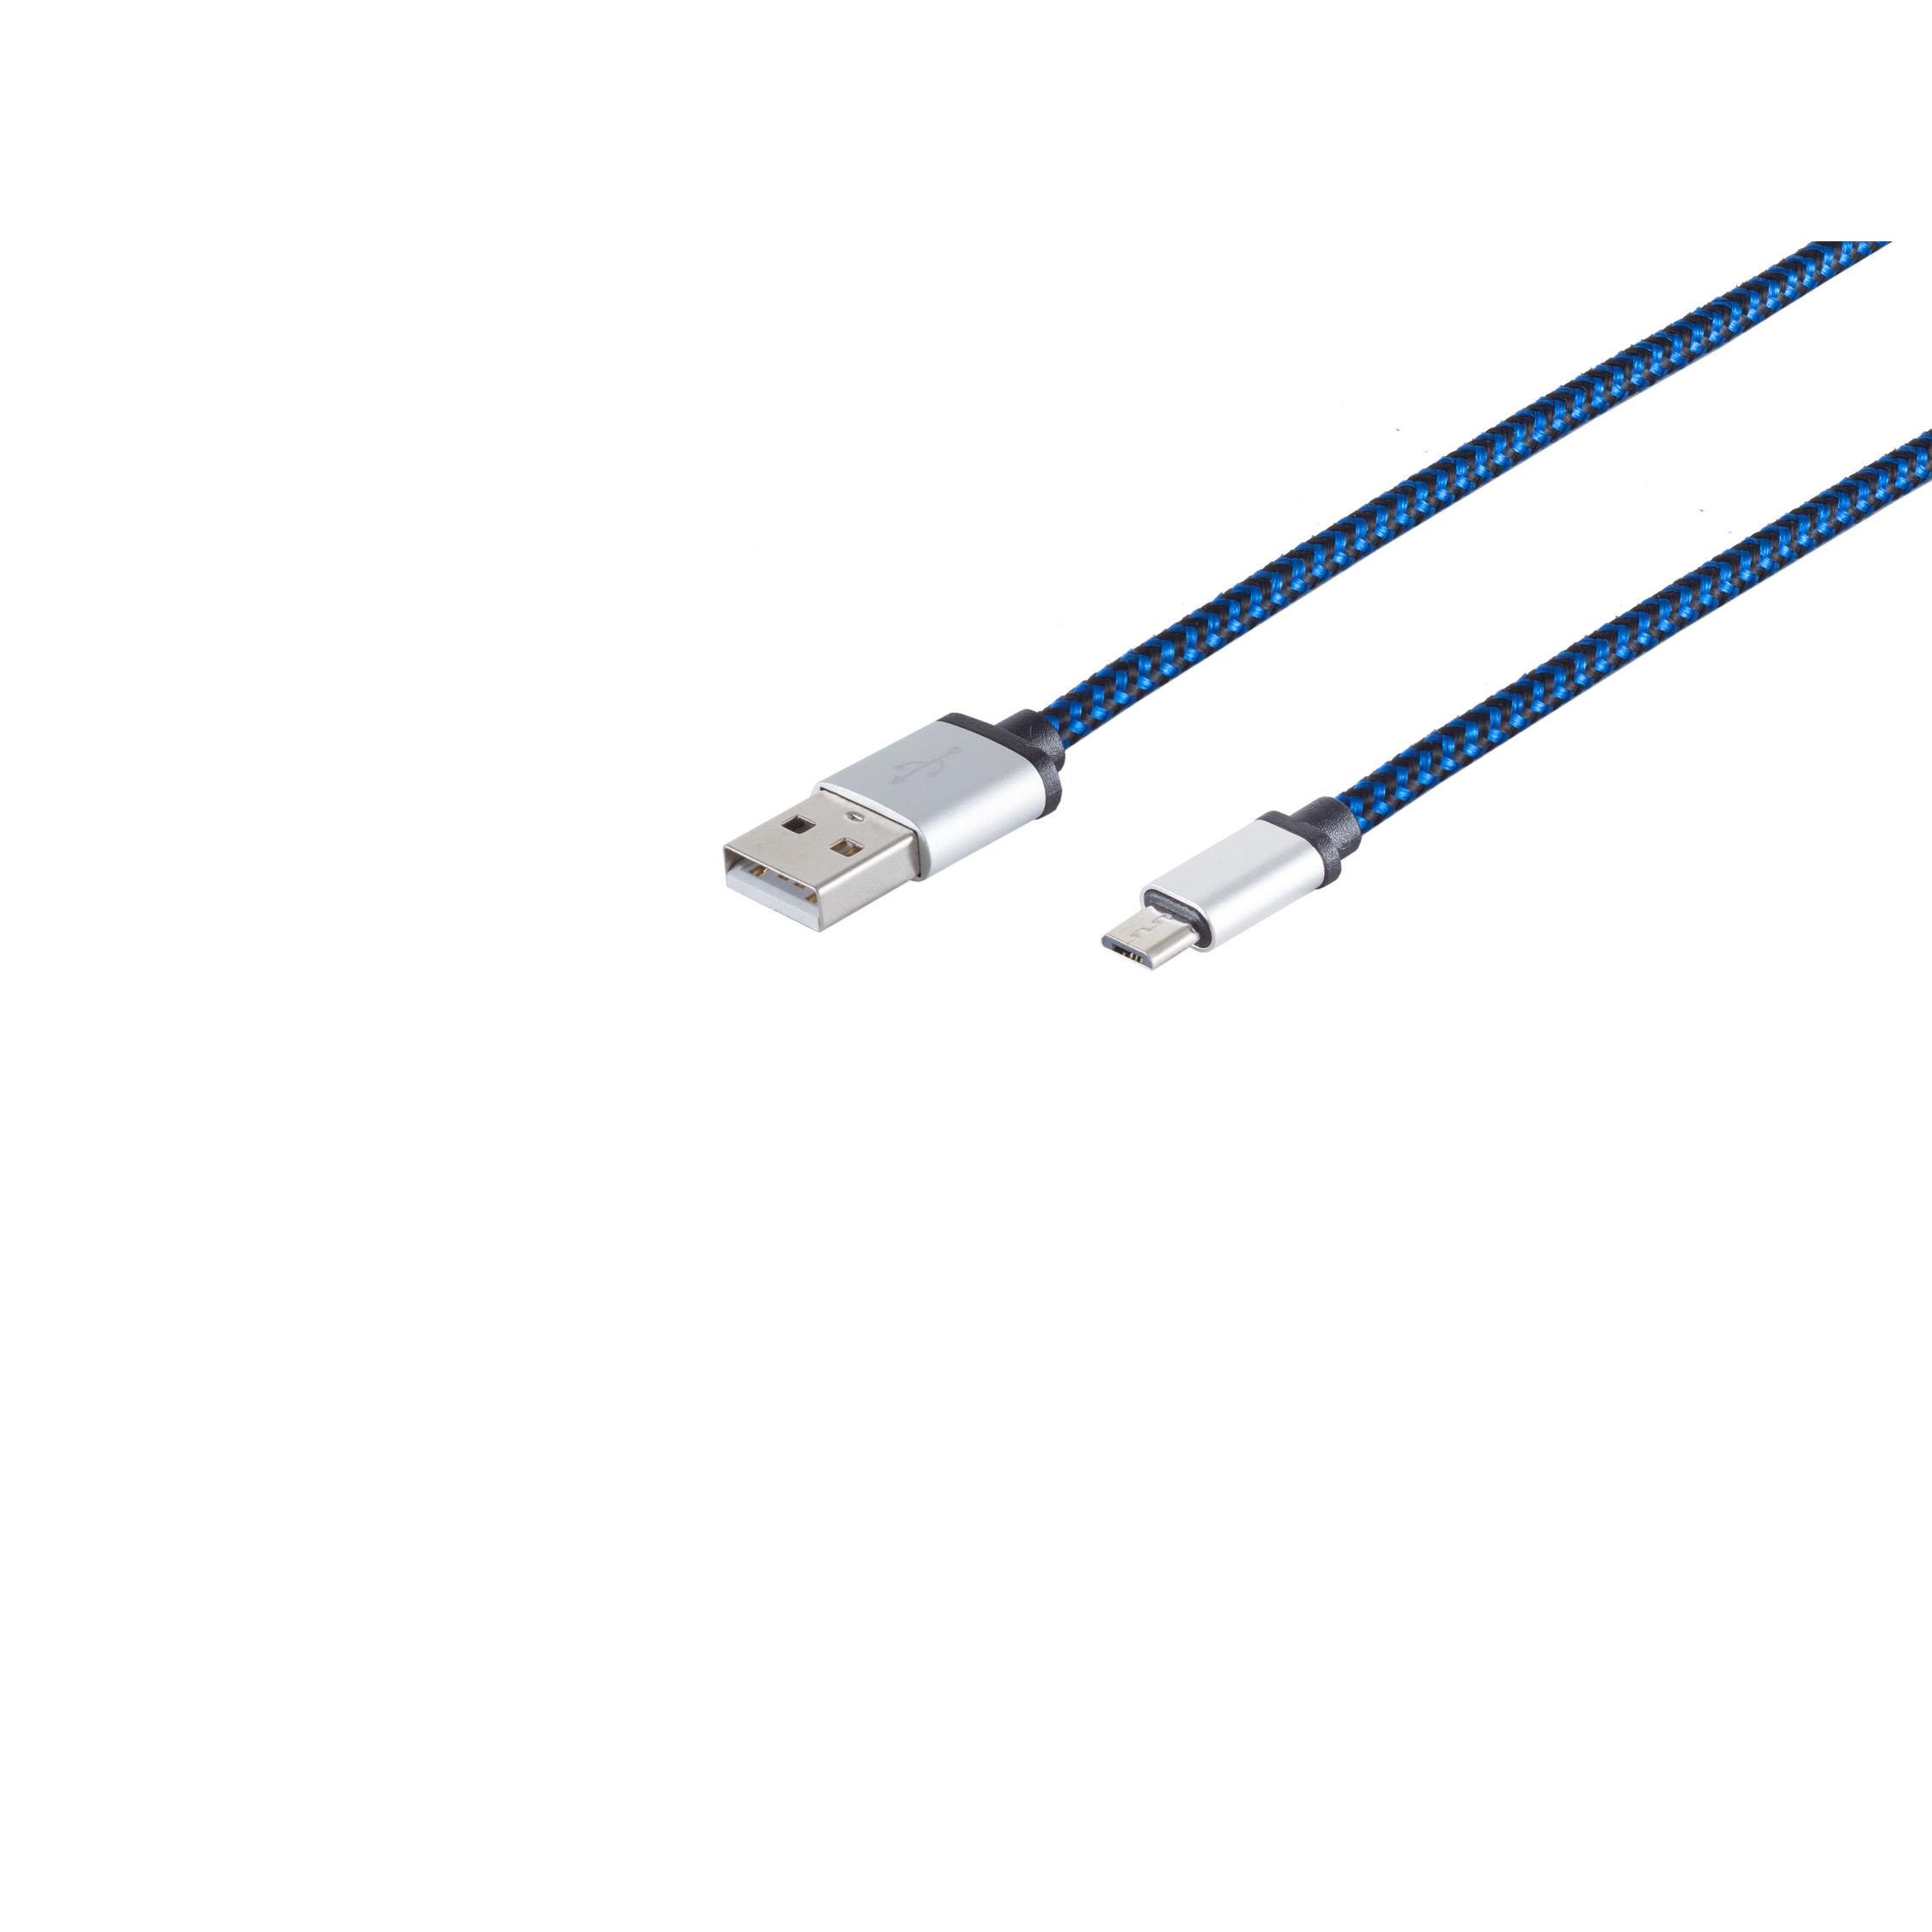 S/CONN MAXIMUM auf blau CONNECTIVITY USB A Micro B, Kabel USB-Ladekabel 0,3m Stecker